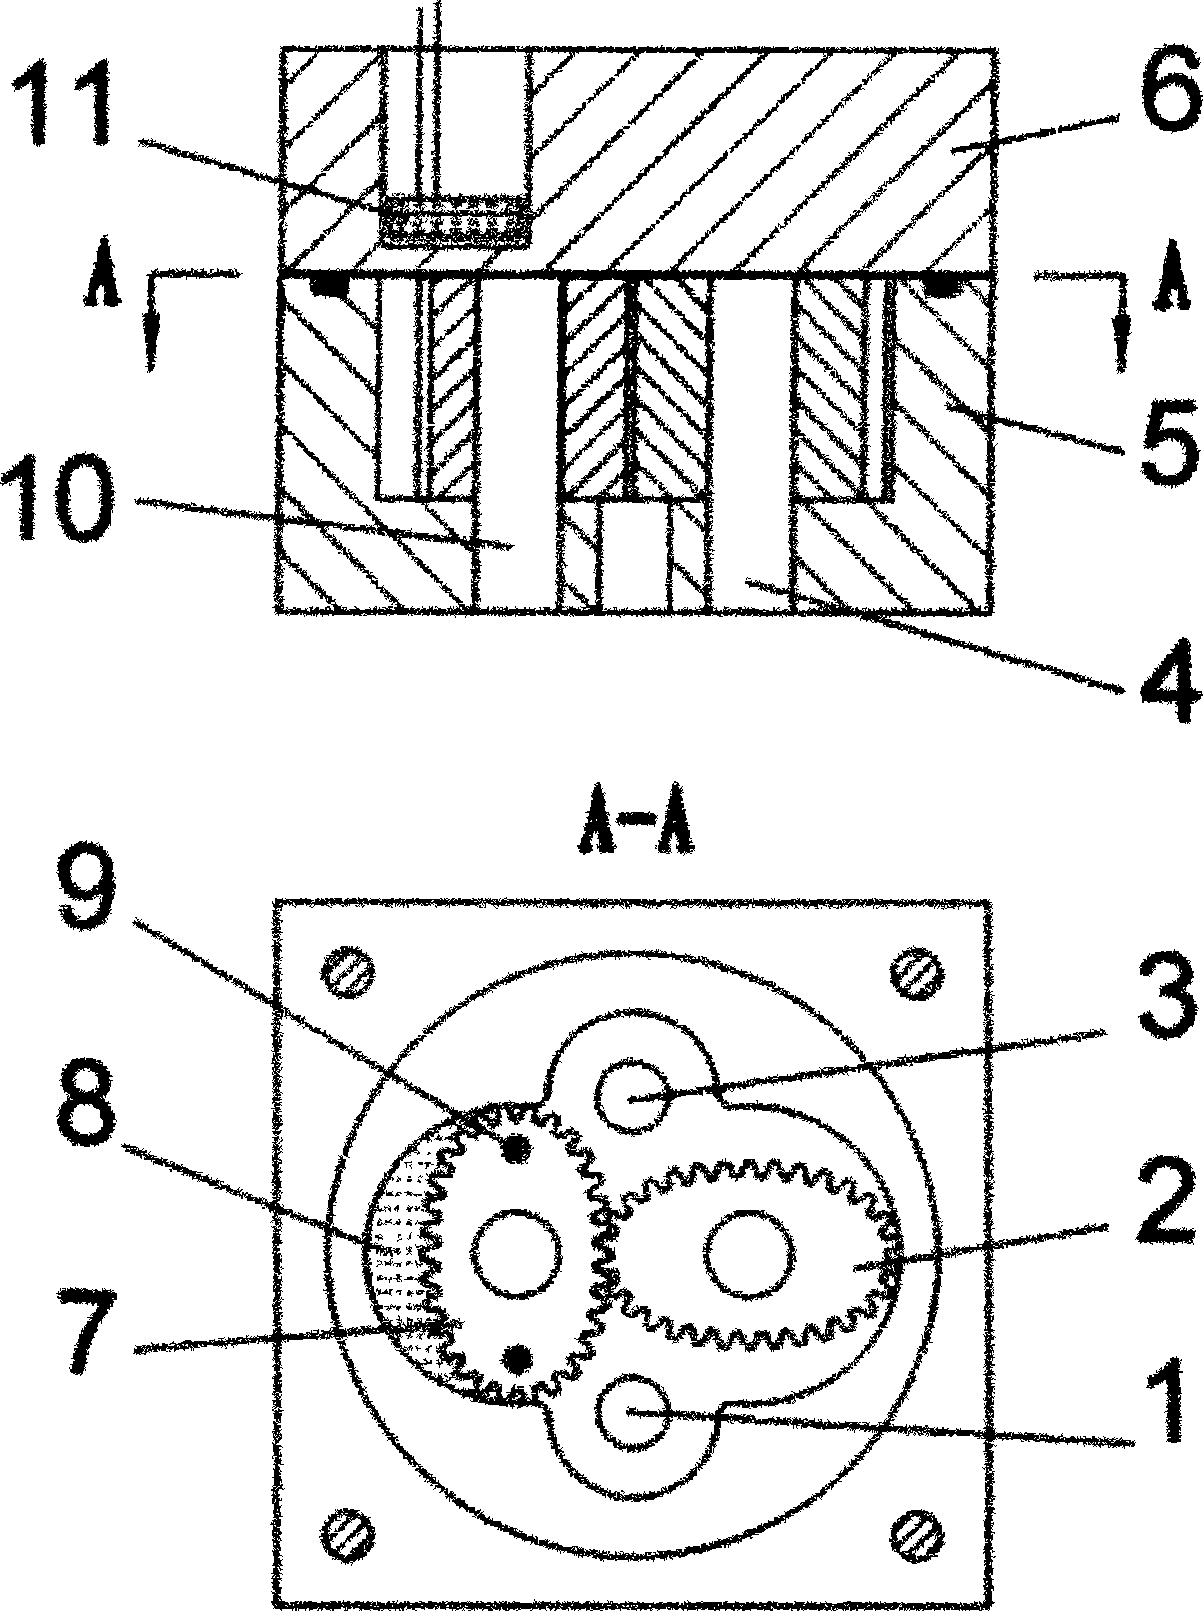 Volume type high order elliptic gear flowmeter